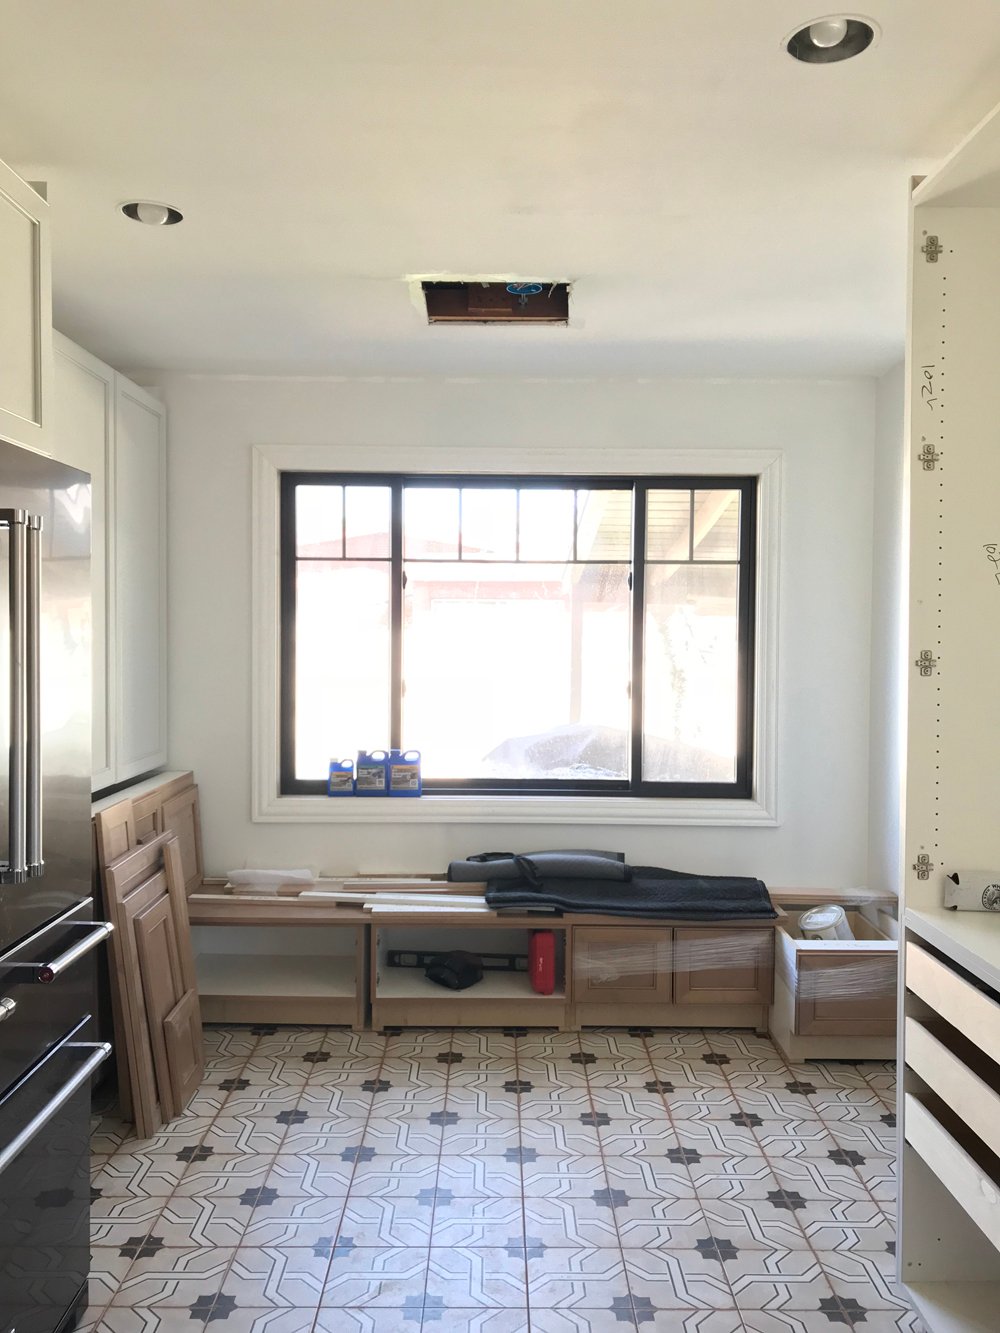 Kitchen Reno – Progress Update #8 - roomfortuesday.com